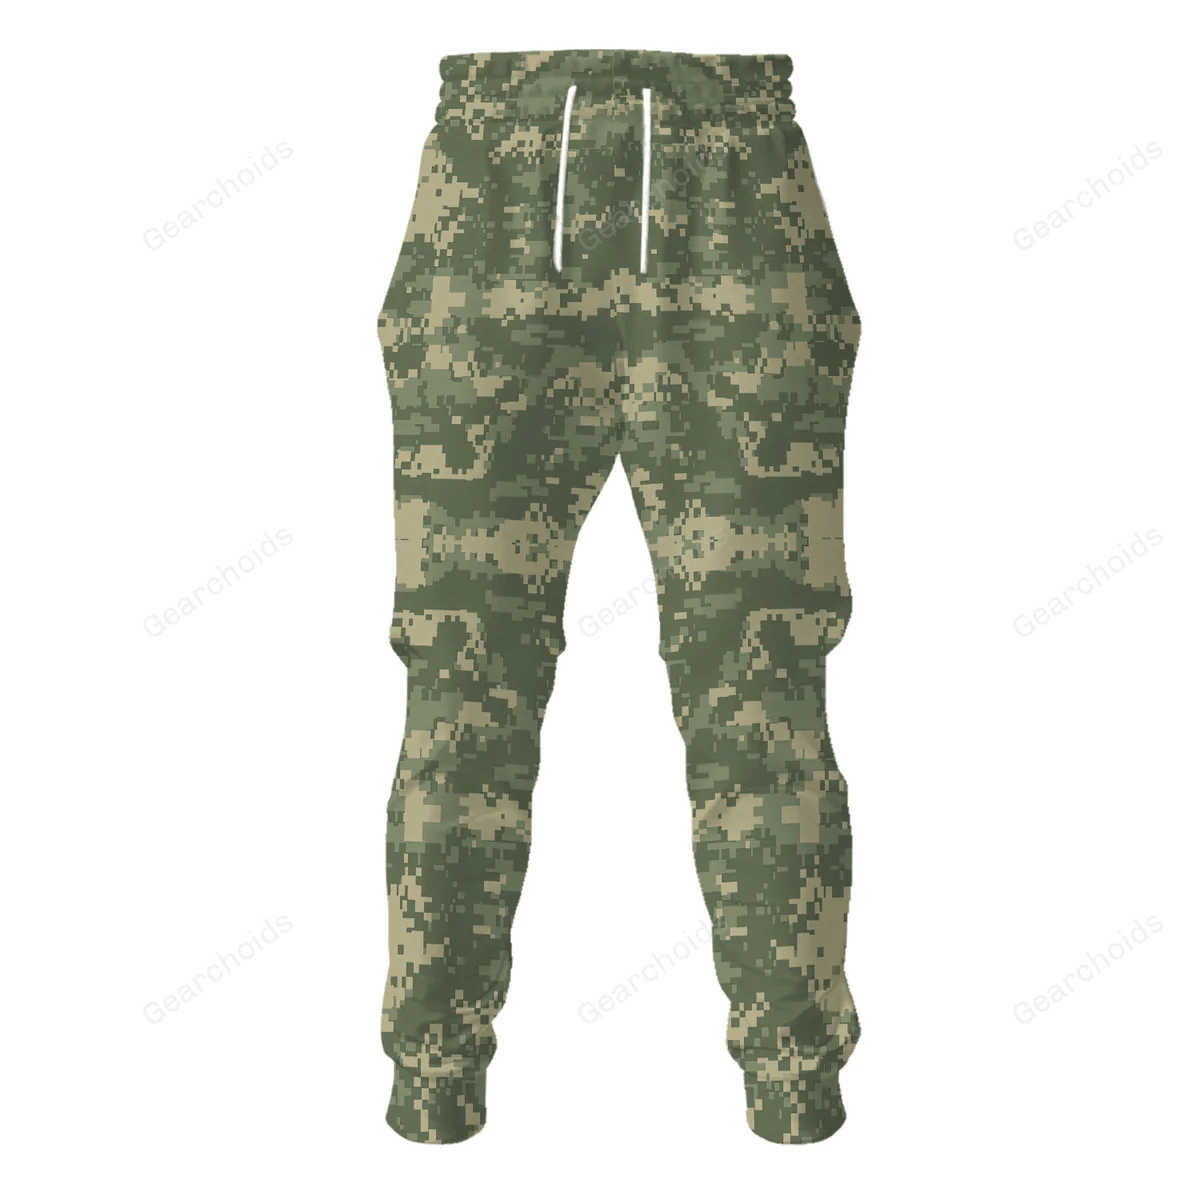 American ACU Or Universal Camouflage Pattern (UCP) CAMO Sweatpants